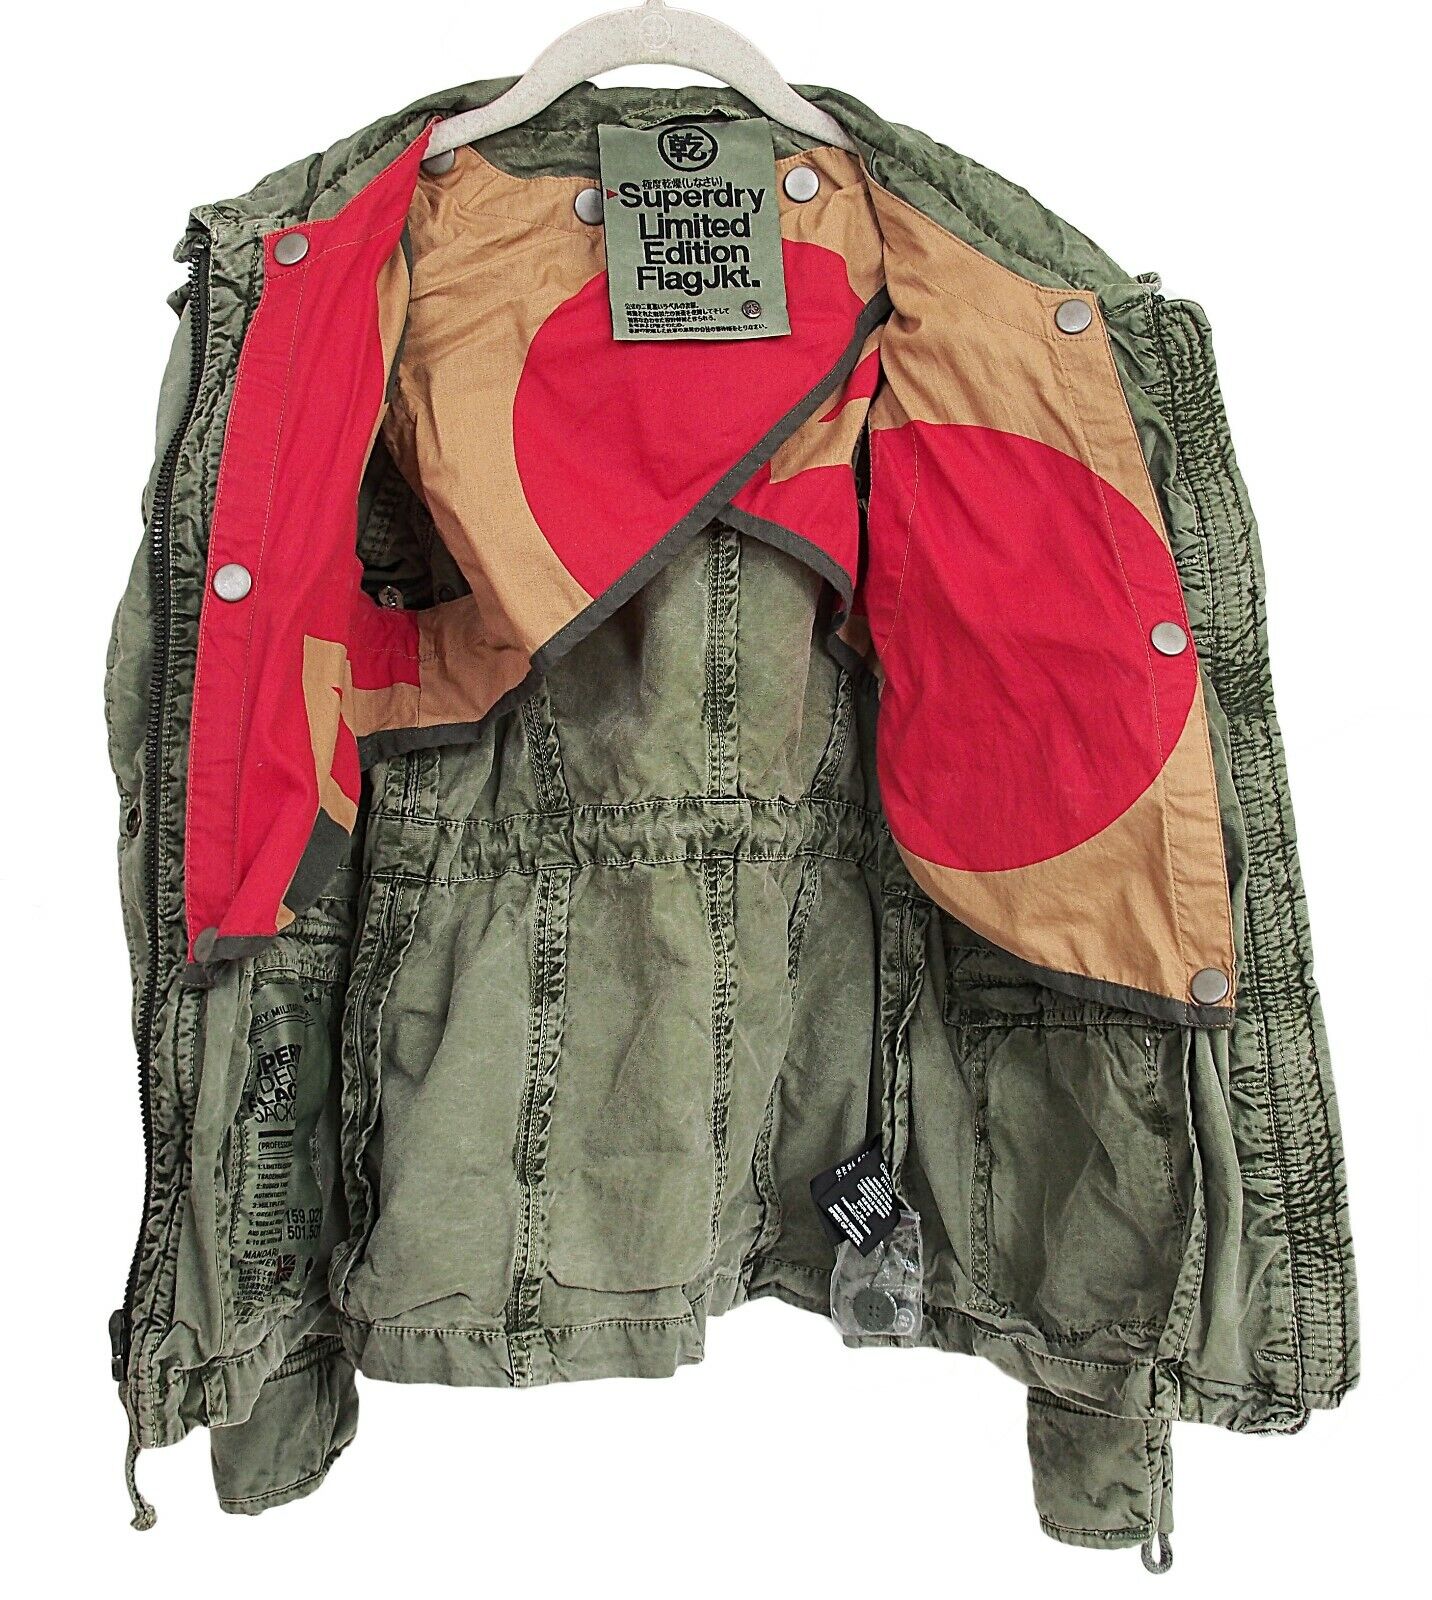 Vrijgekomen dauw diepvries SUPERDRY Limited Edition Women's Flag Jacket Green Size XS | eBay